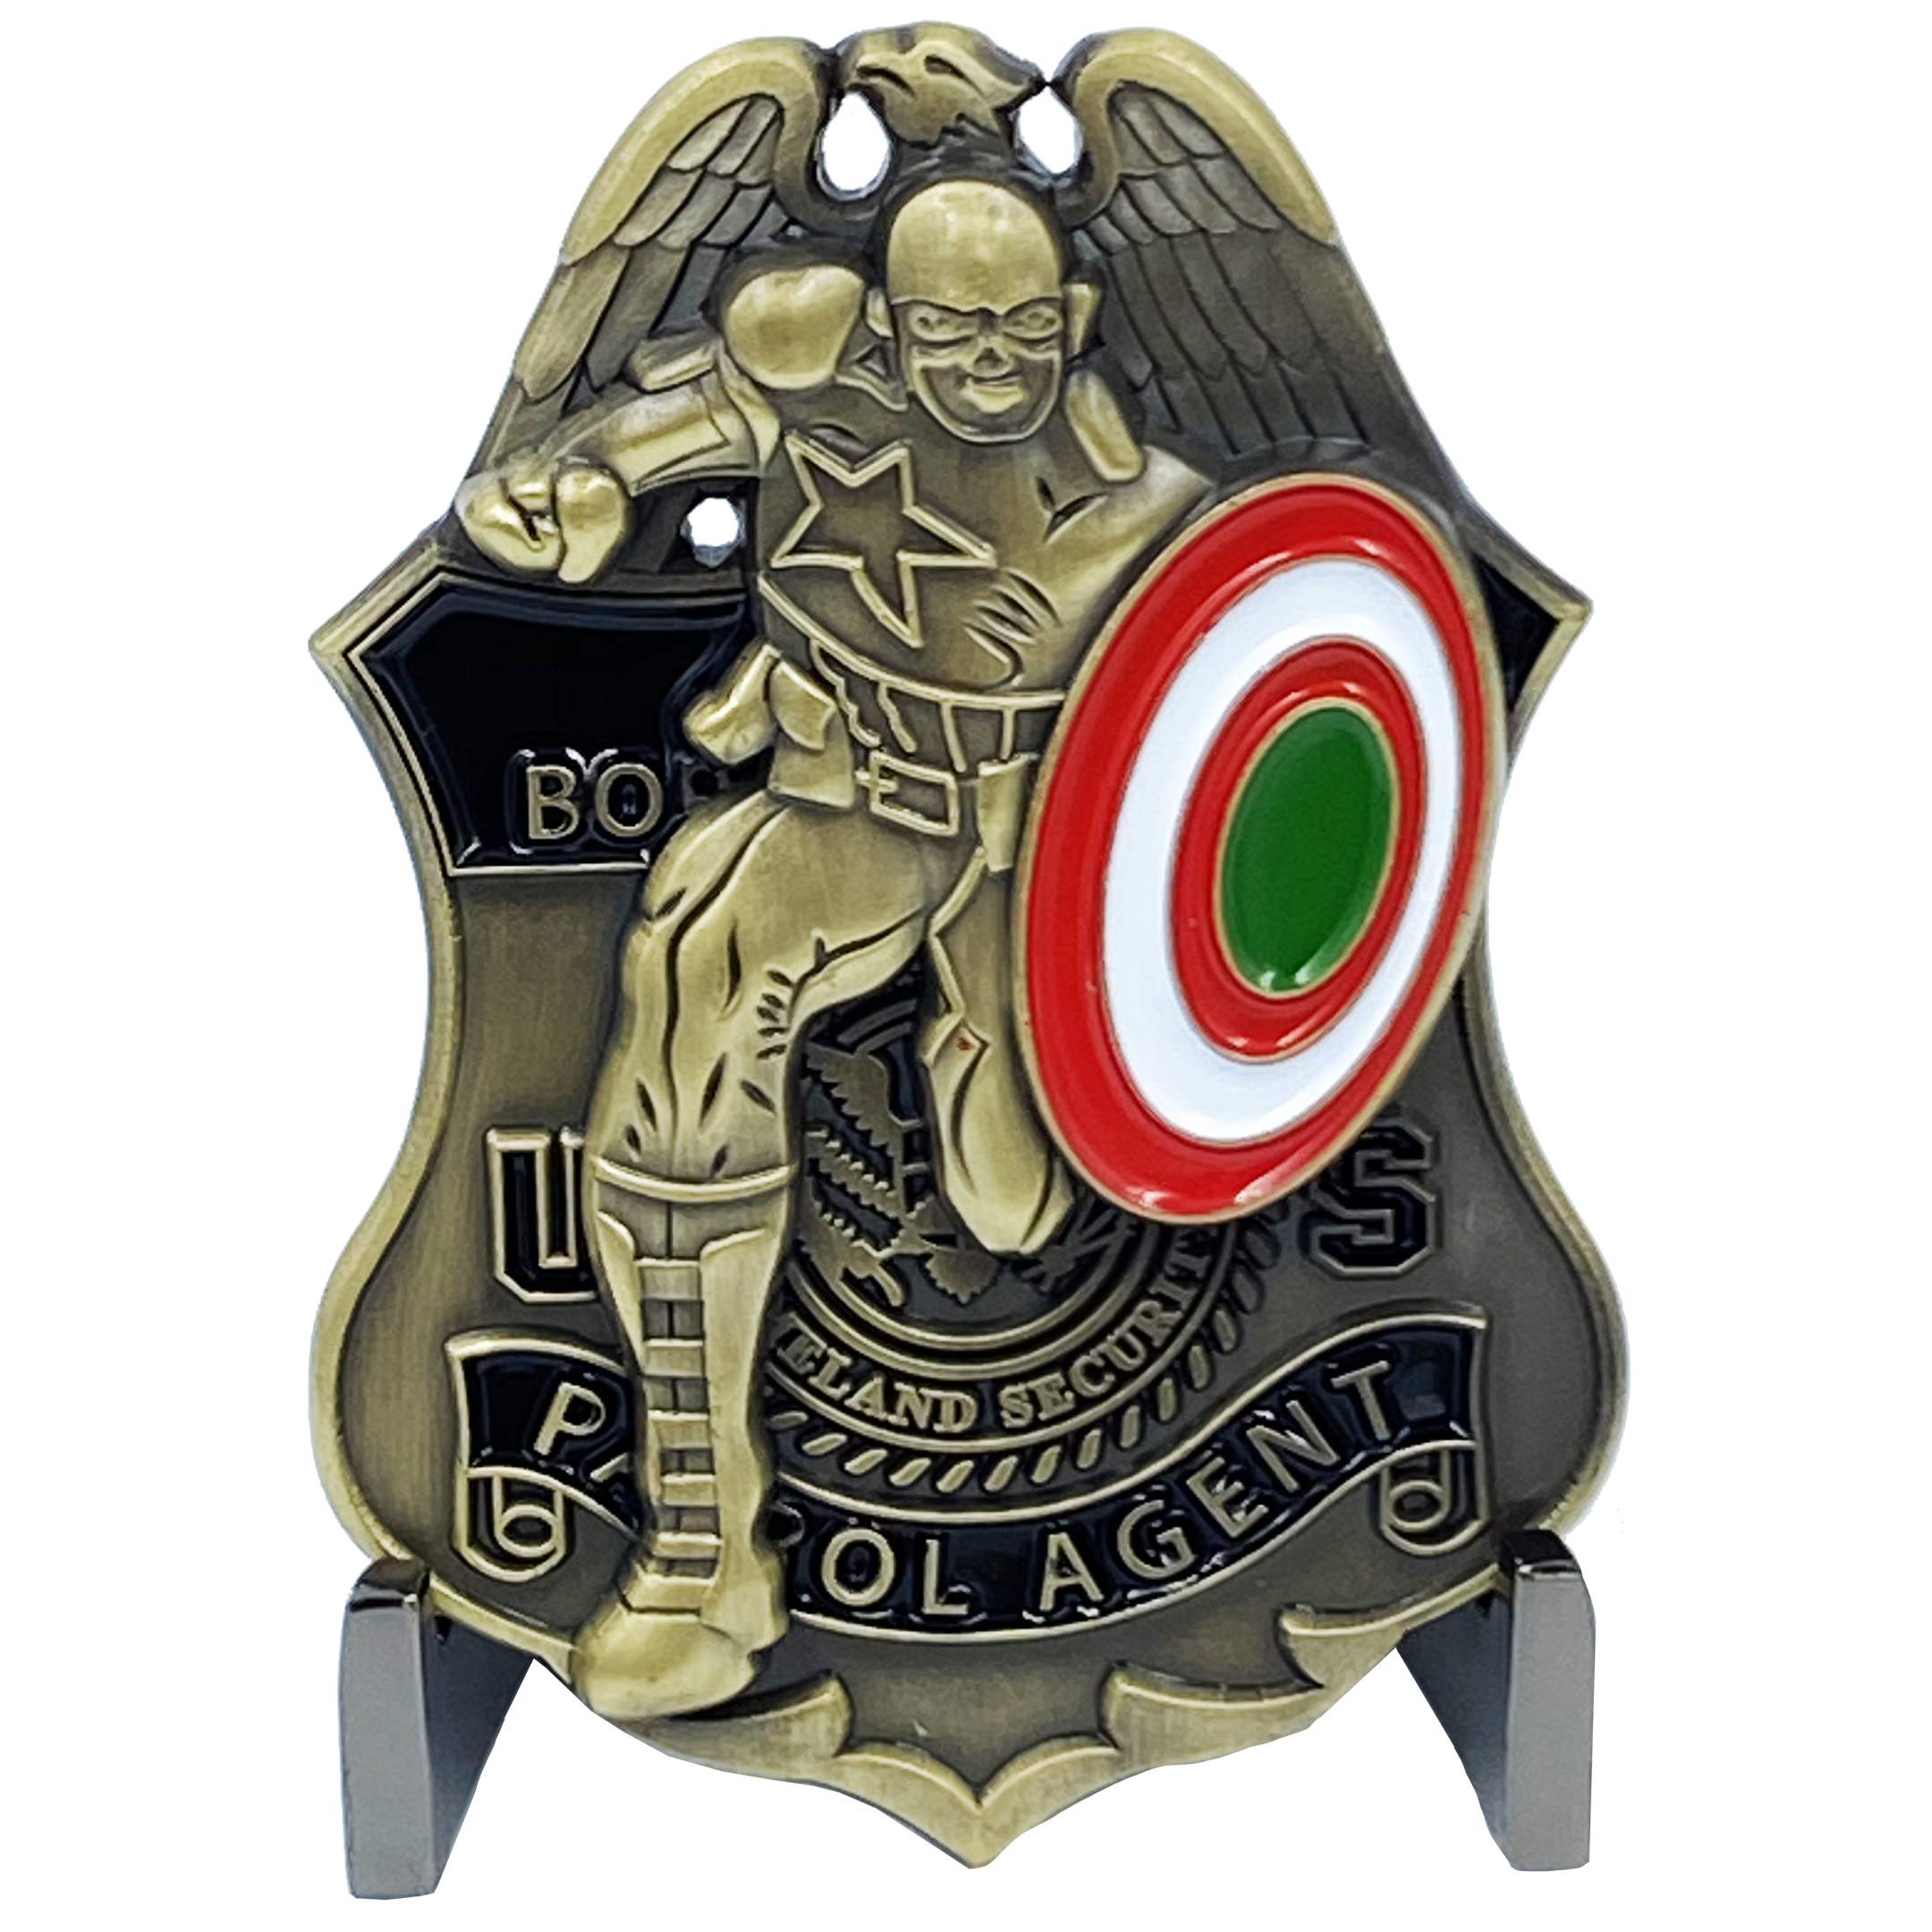 DL7-17 Captain Super Hero inspired Thin Green Line American Flag Challenge Coin CBP Border Patrol Shield